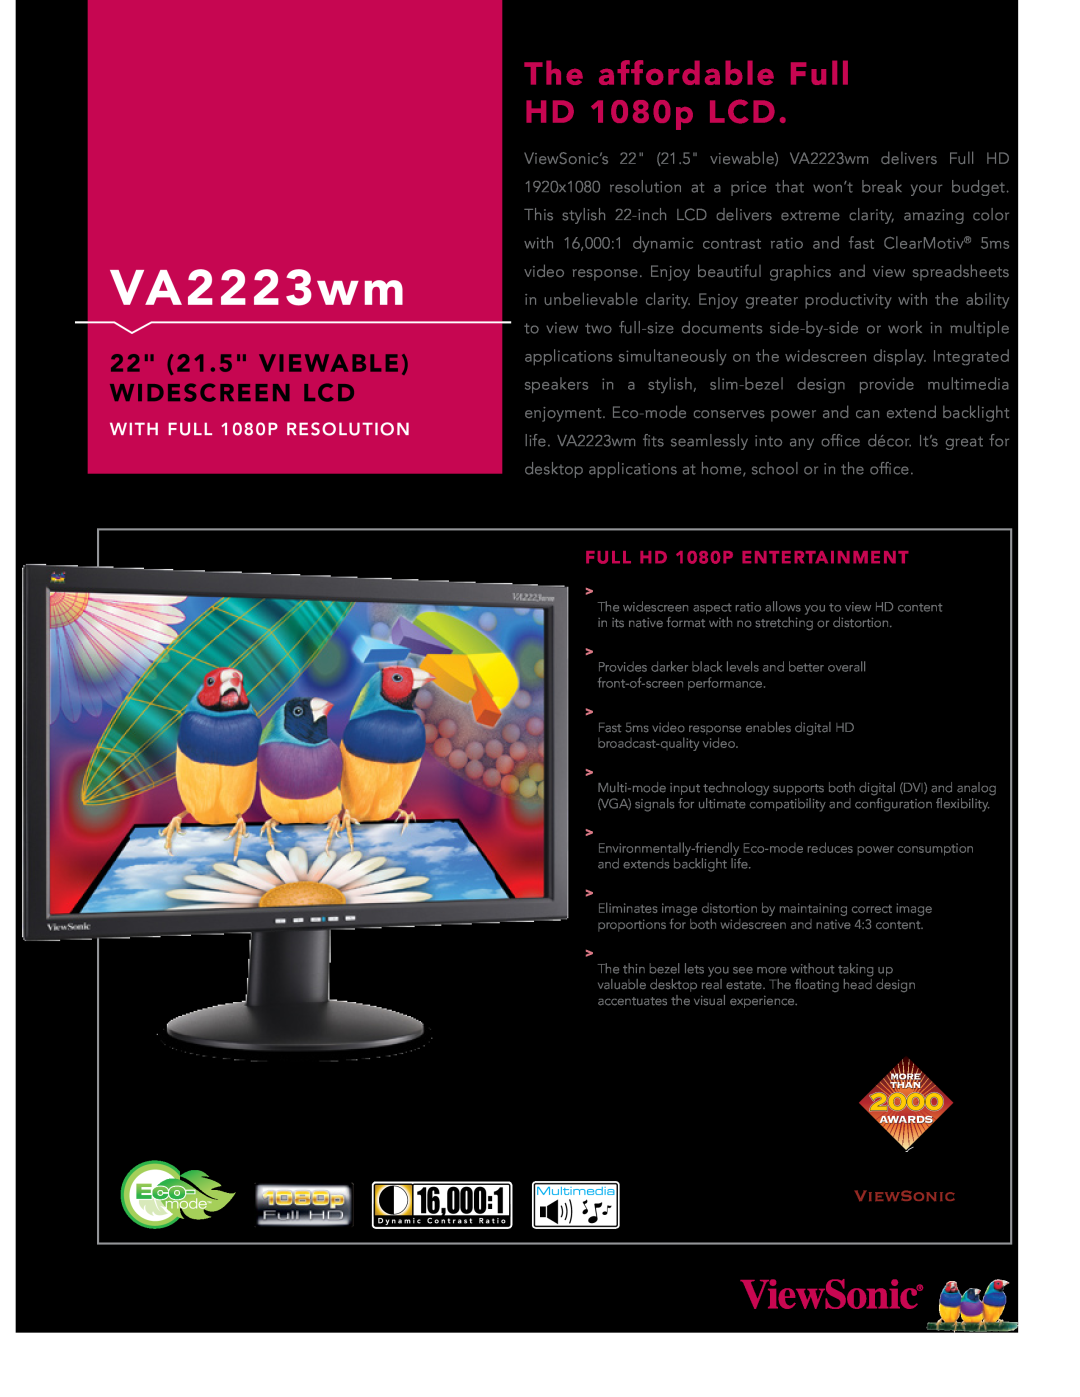 ViewSonic VA2223WM manual VA2223wm, 16,0001, The affordable Full HD 1080p LCD, 22 21.5 VIEWABLE WIDESCREEN LCD 